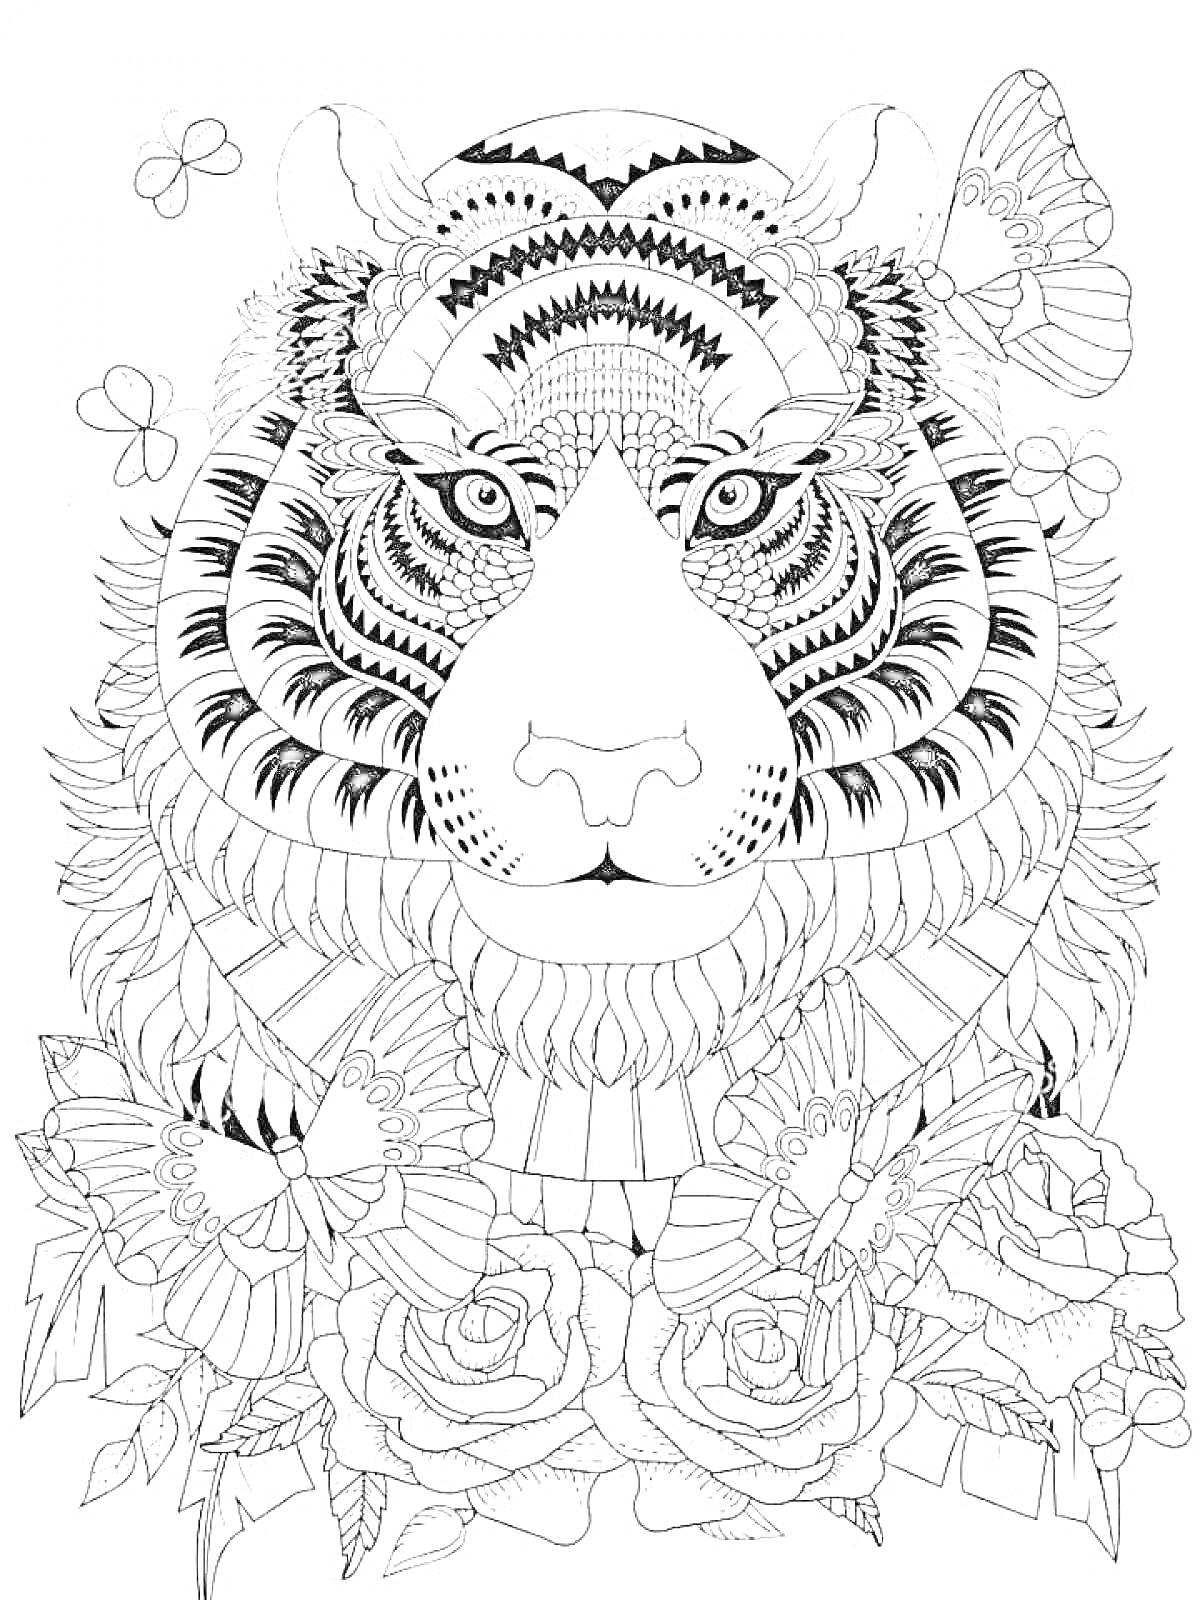 Раскраска Тигр с узорами, бабочками и розами